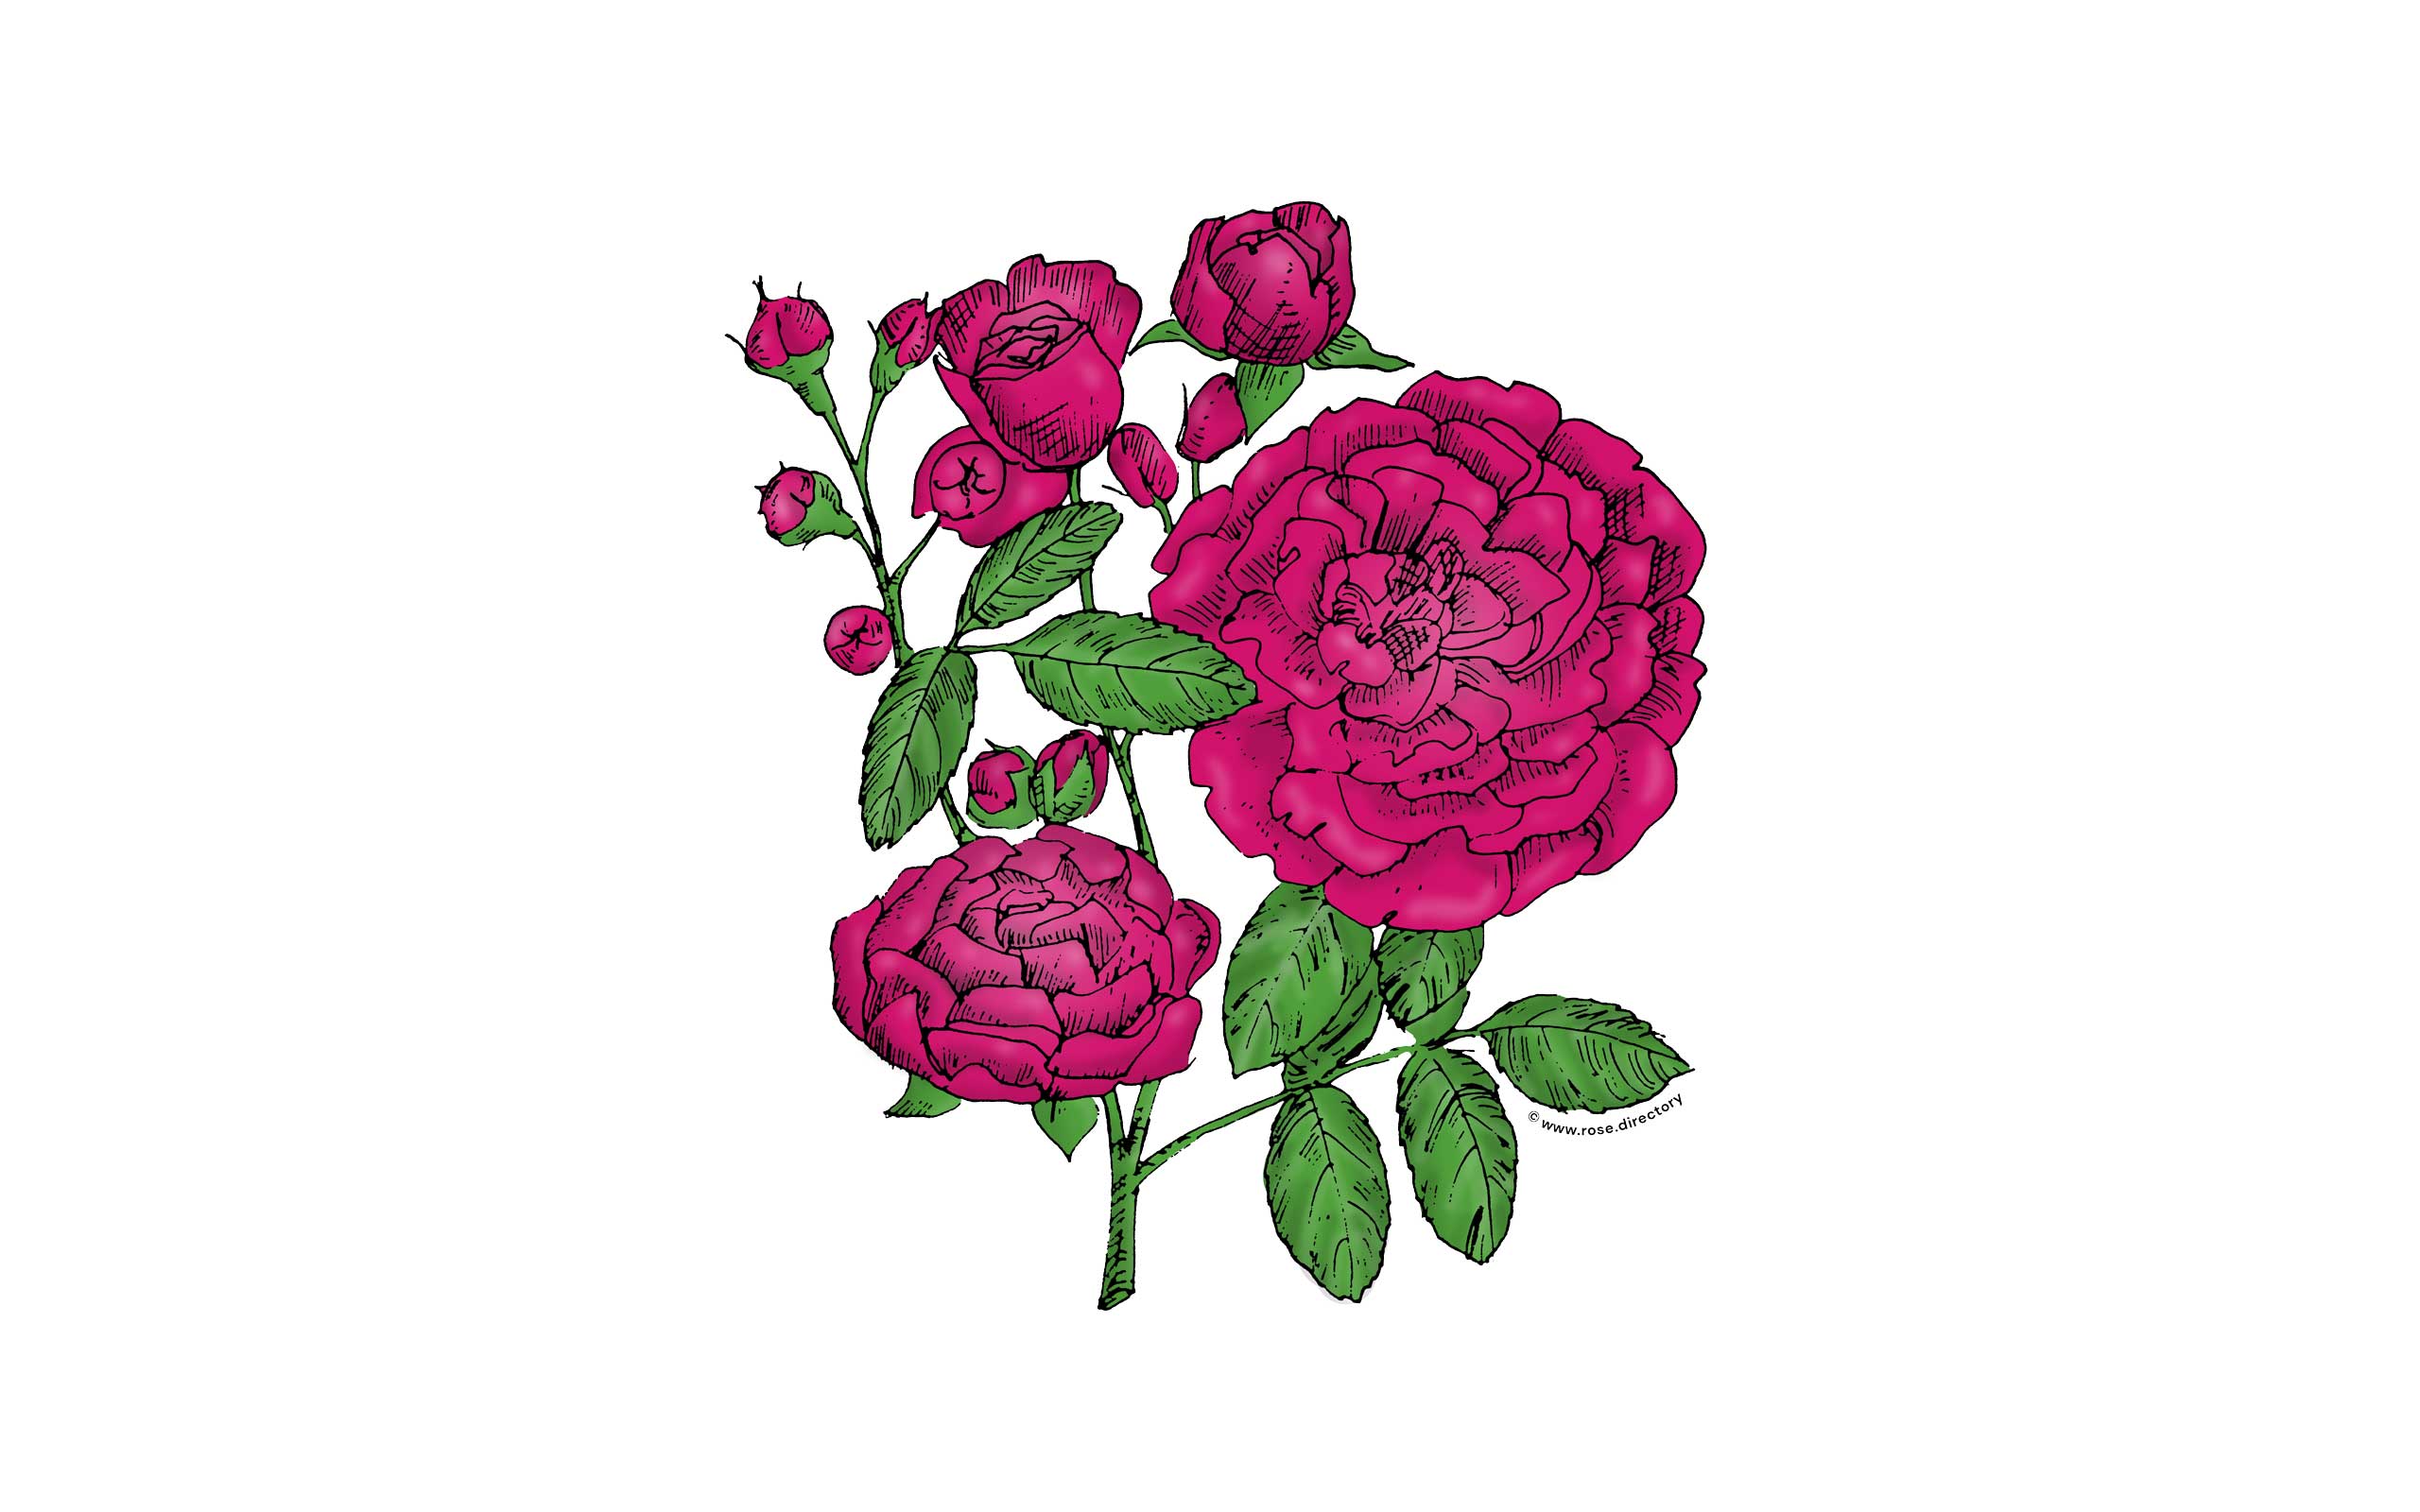 Deep Pink Rosette Rose Bloom Full 26-40 Petals In 3+ Rows